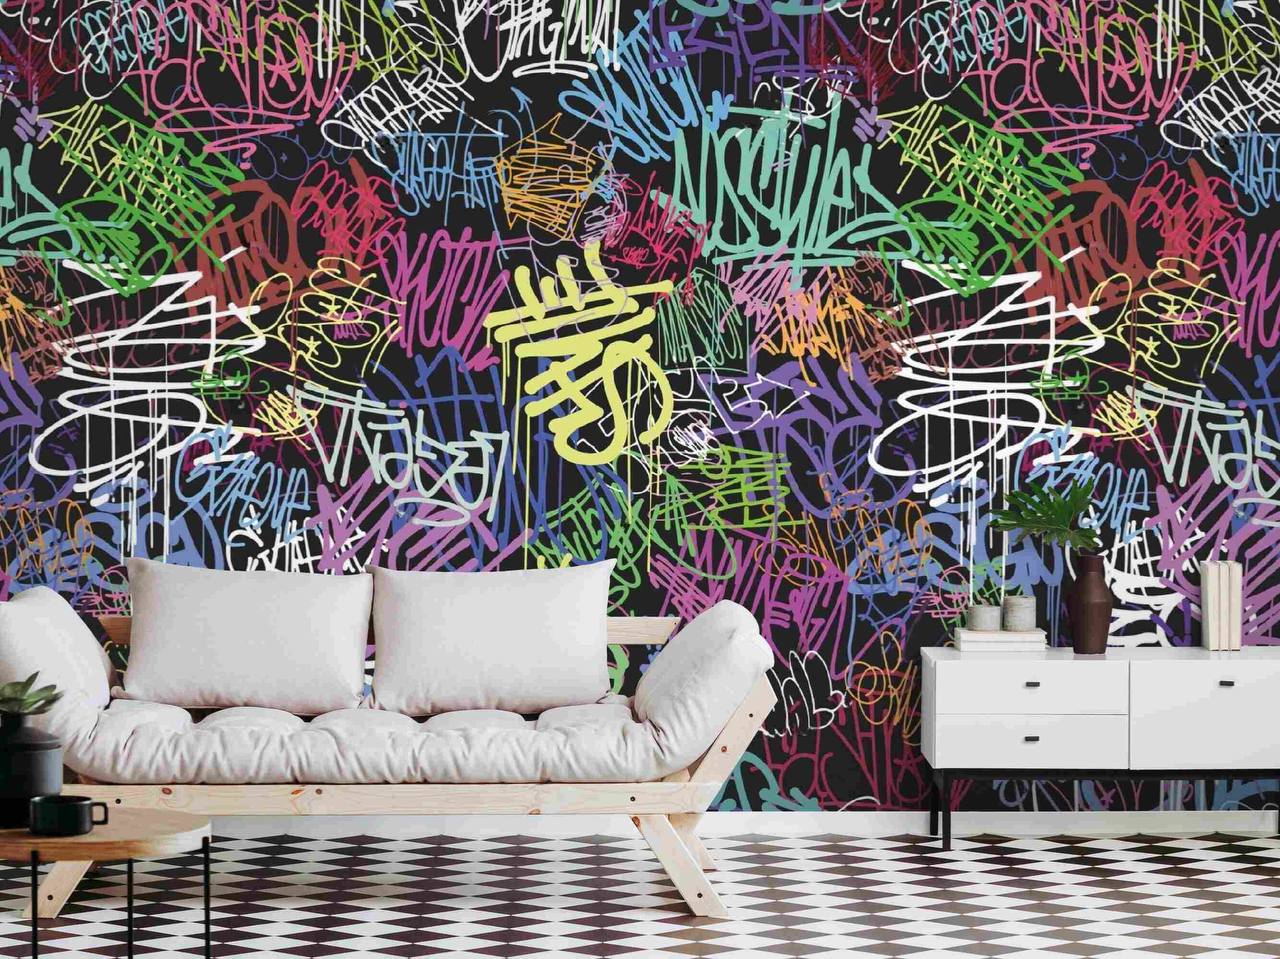 Peel and stick graffiti wallpaper in a bedroom